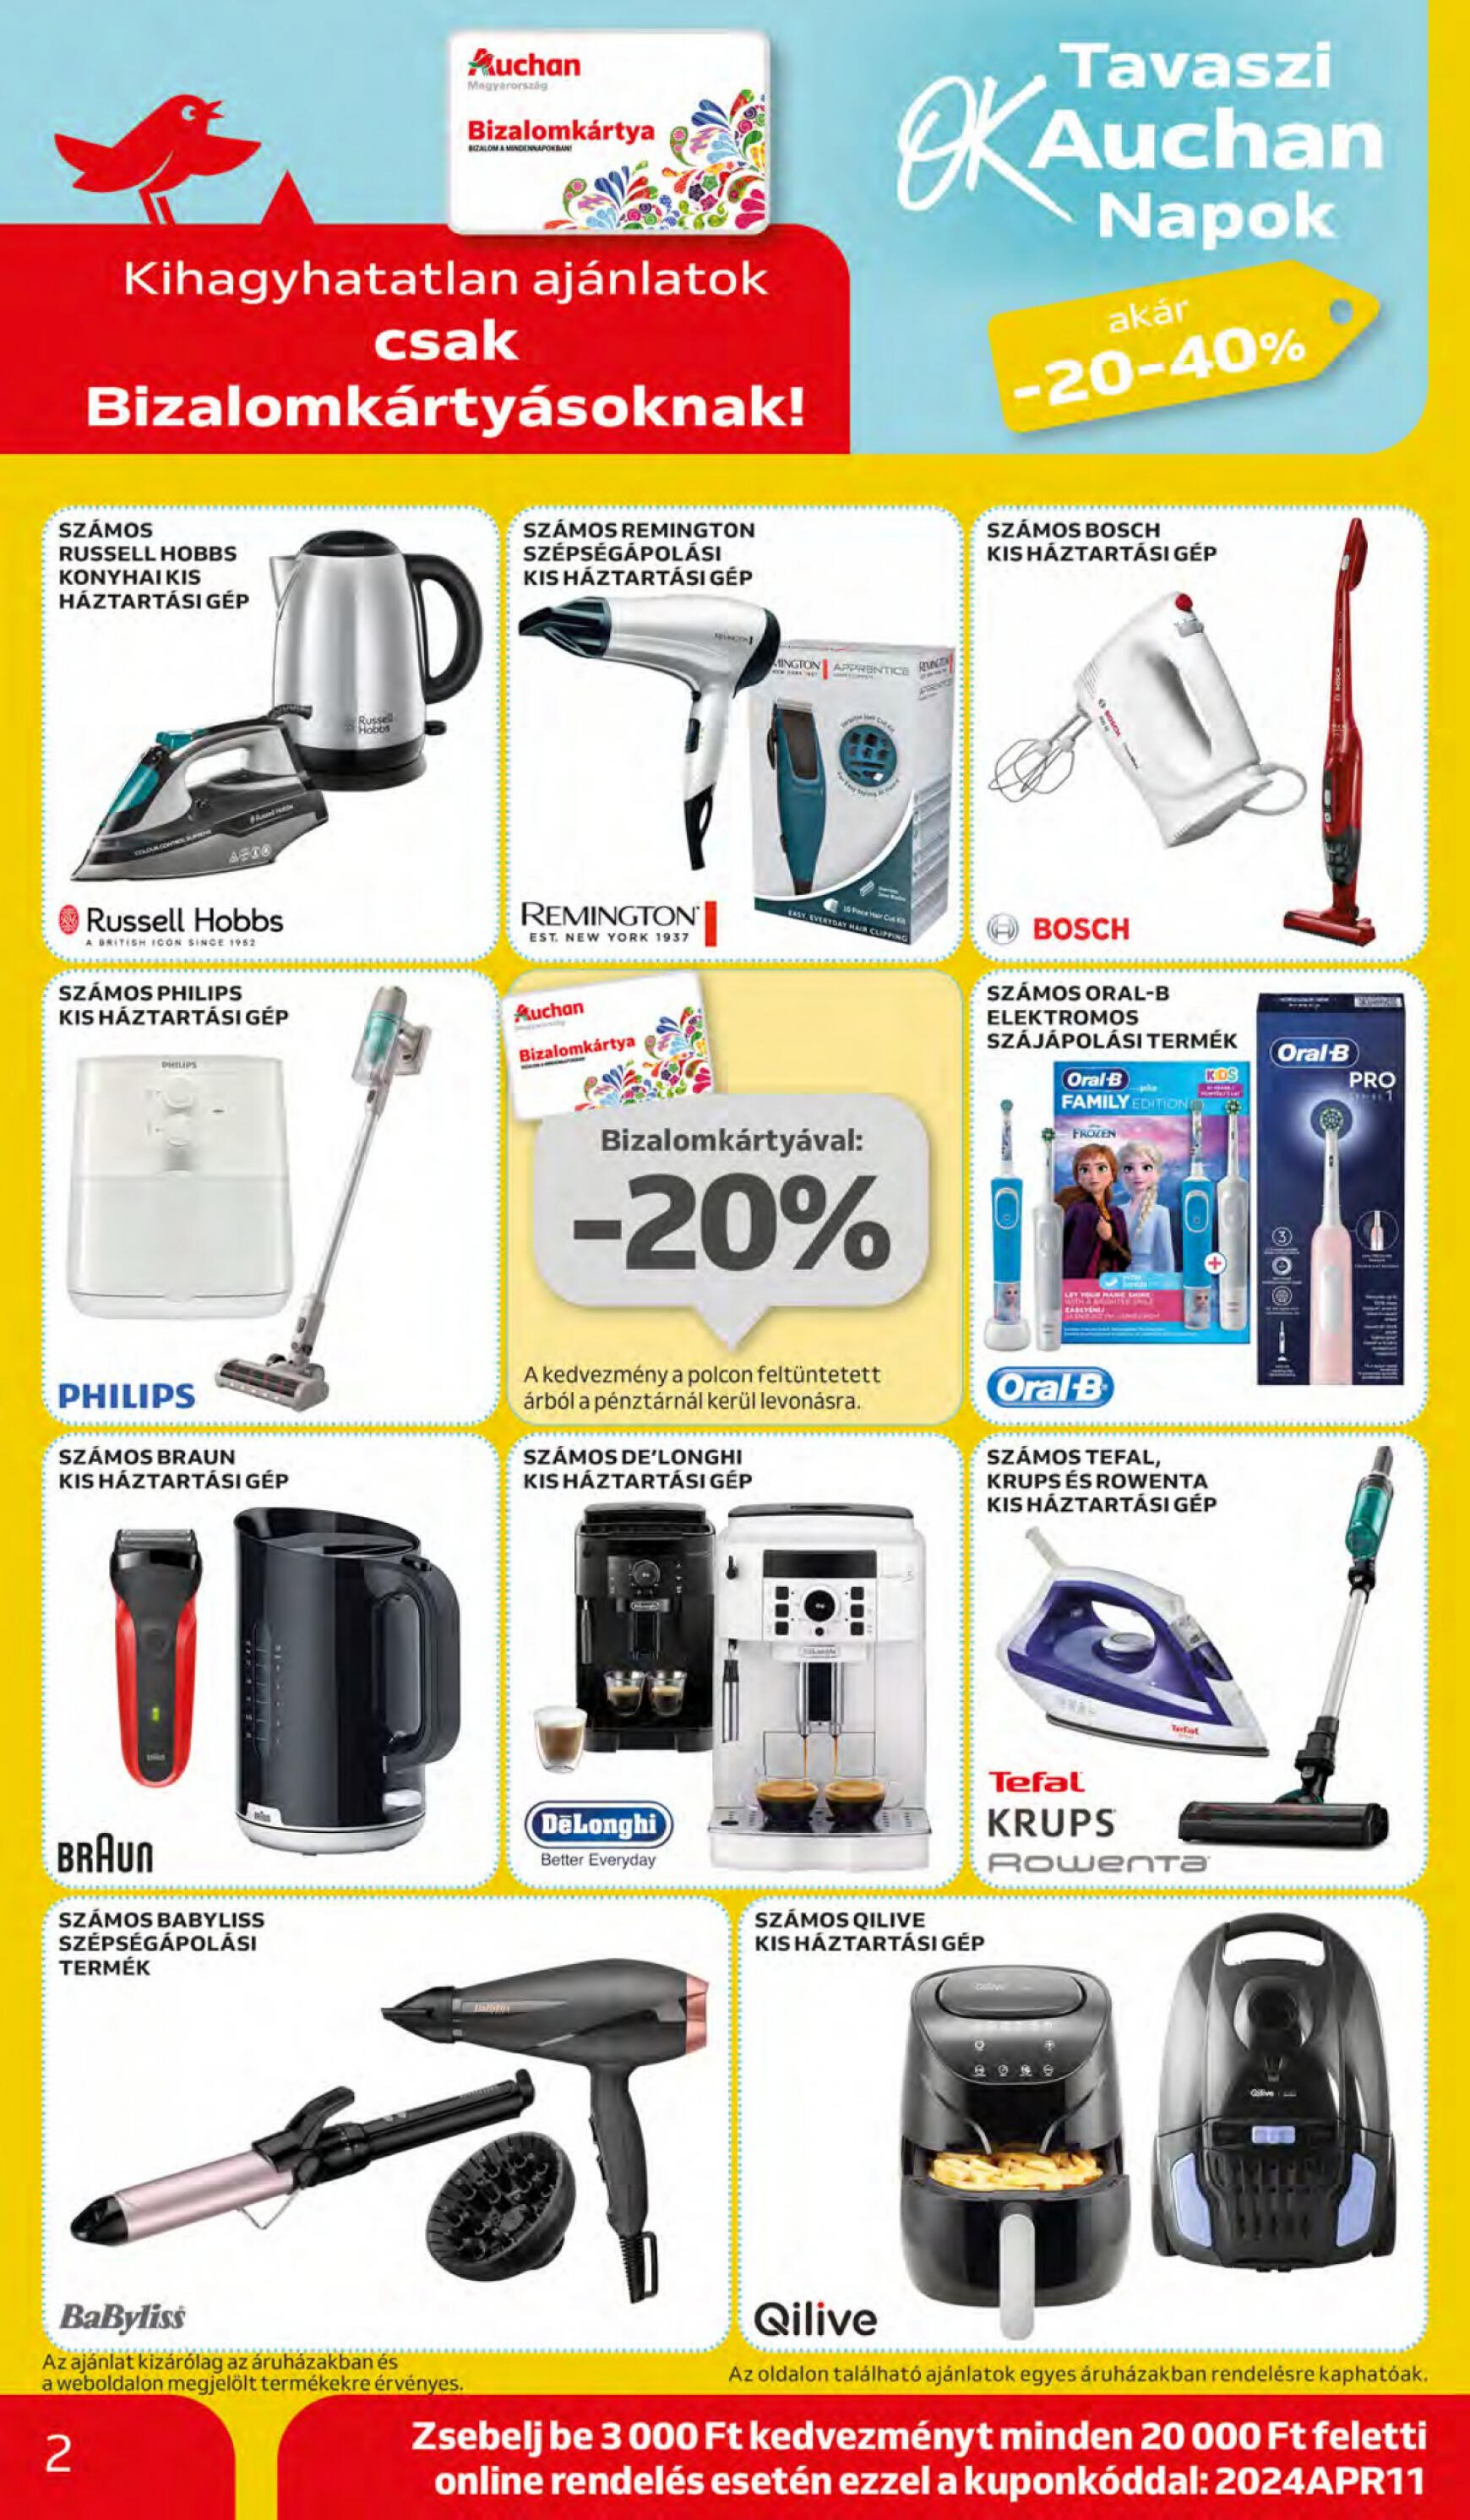 auchan - Aktuális újság Auchan 04.11. - 04.17. - page: 2